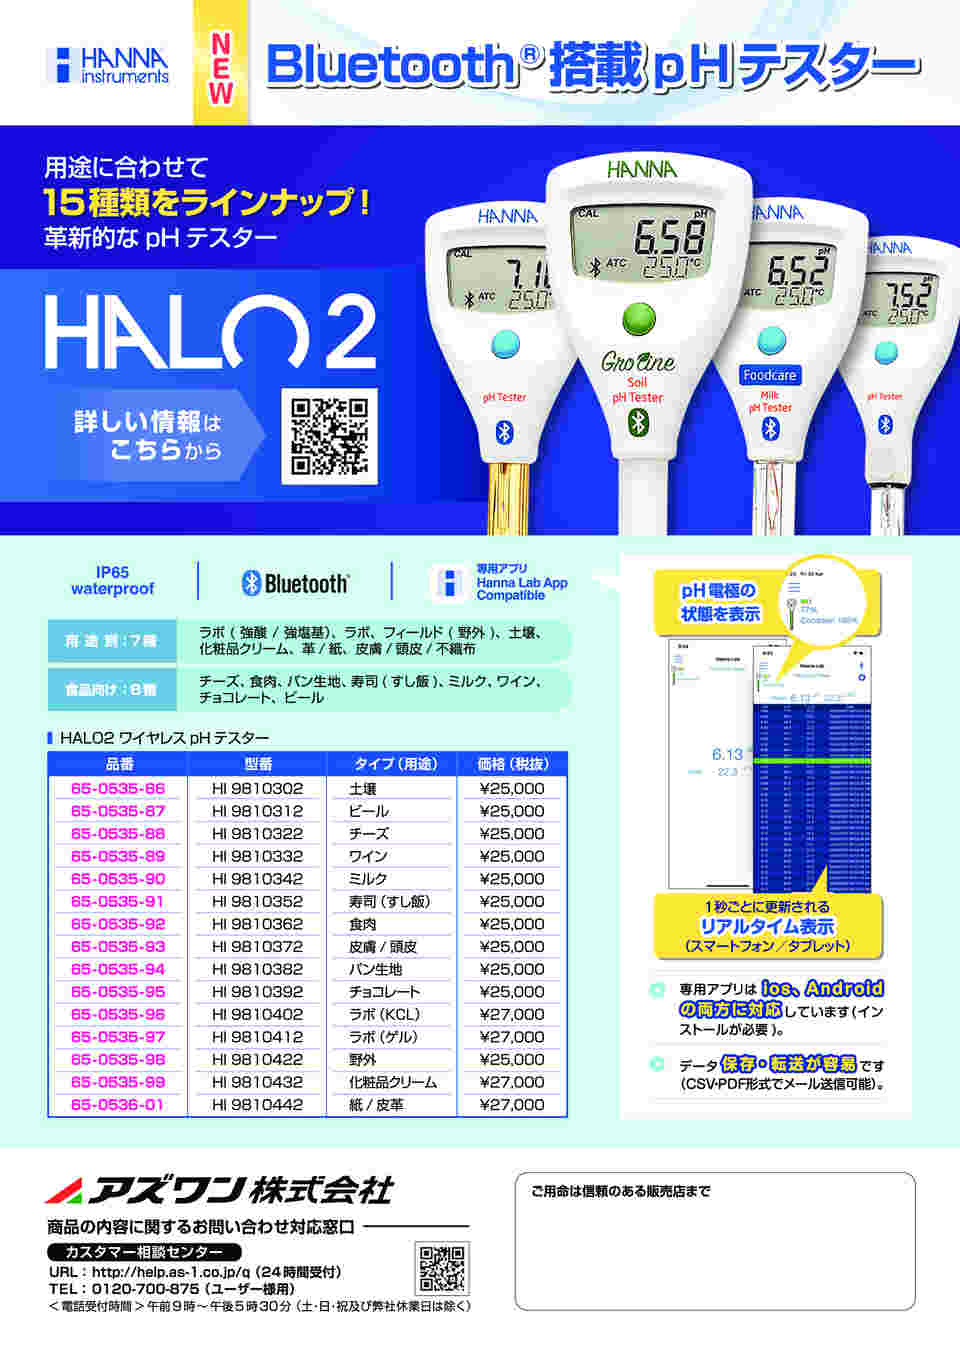 65-0535-91 HALO2 ワイヤレスpHテスター 寿司 HI 9810352 【AXEL